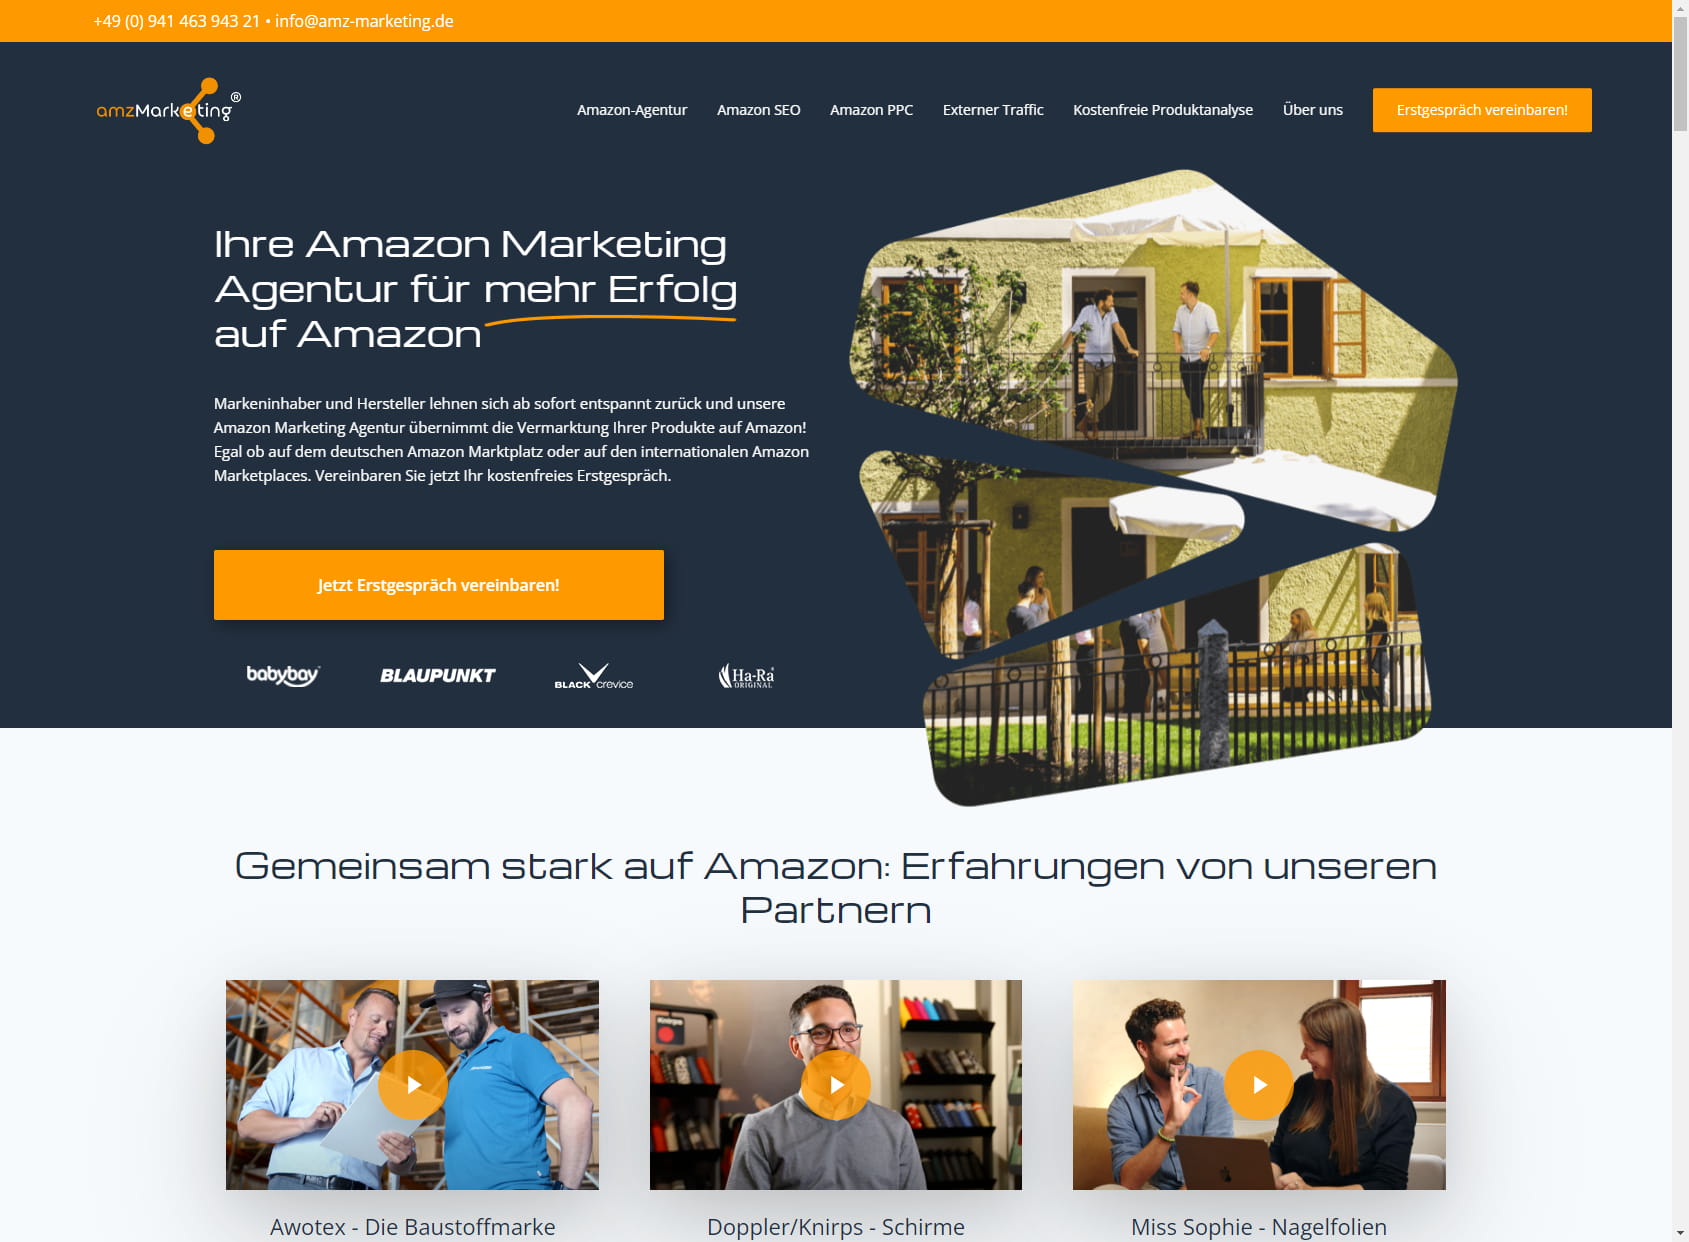 AMZ-Marketing GmbH